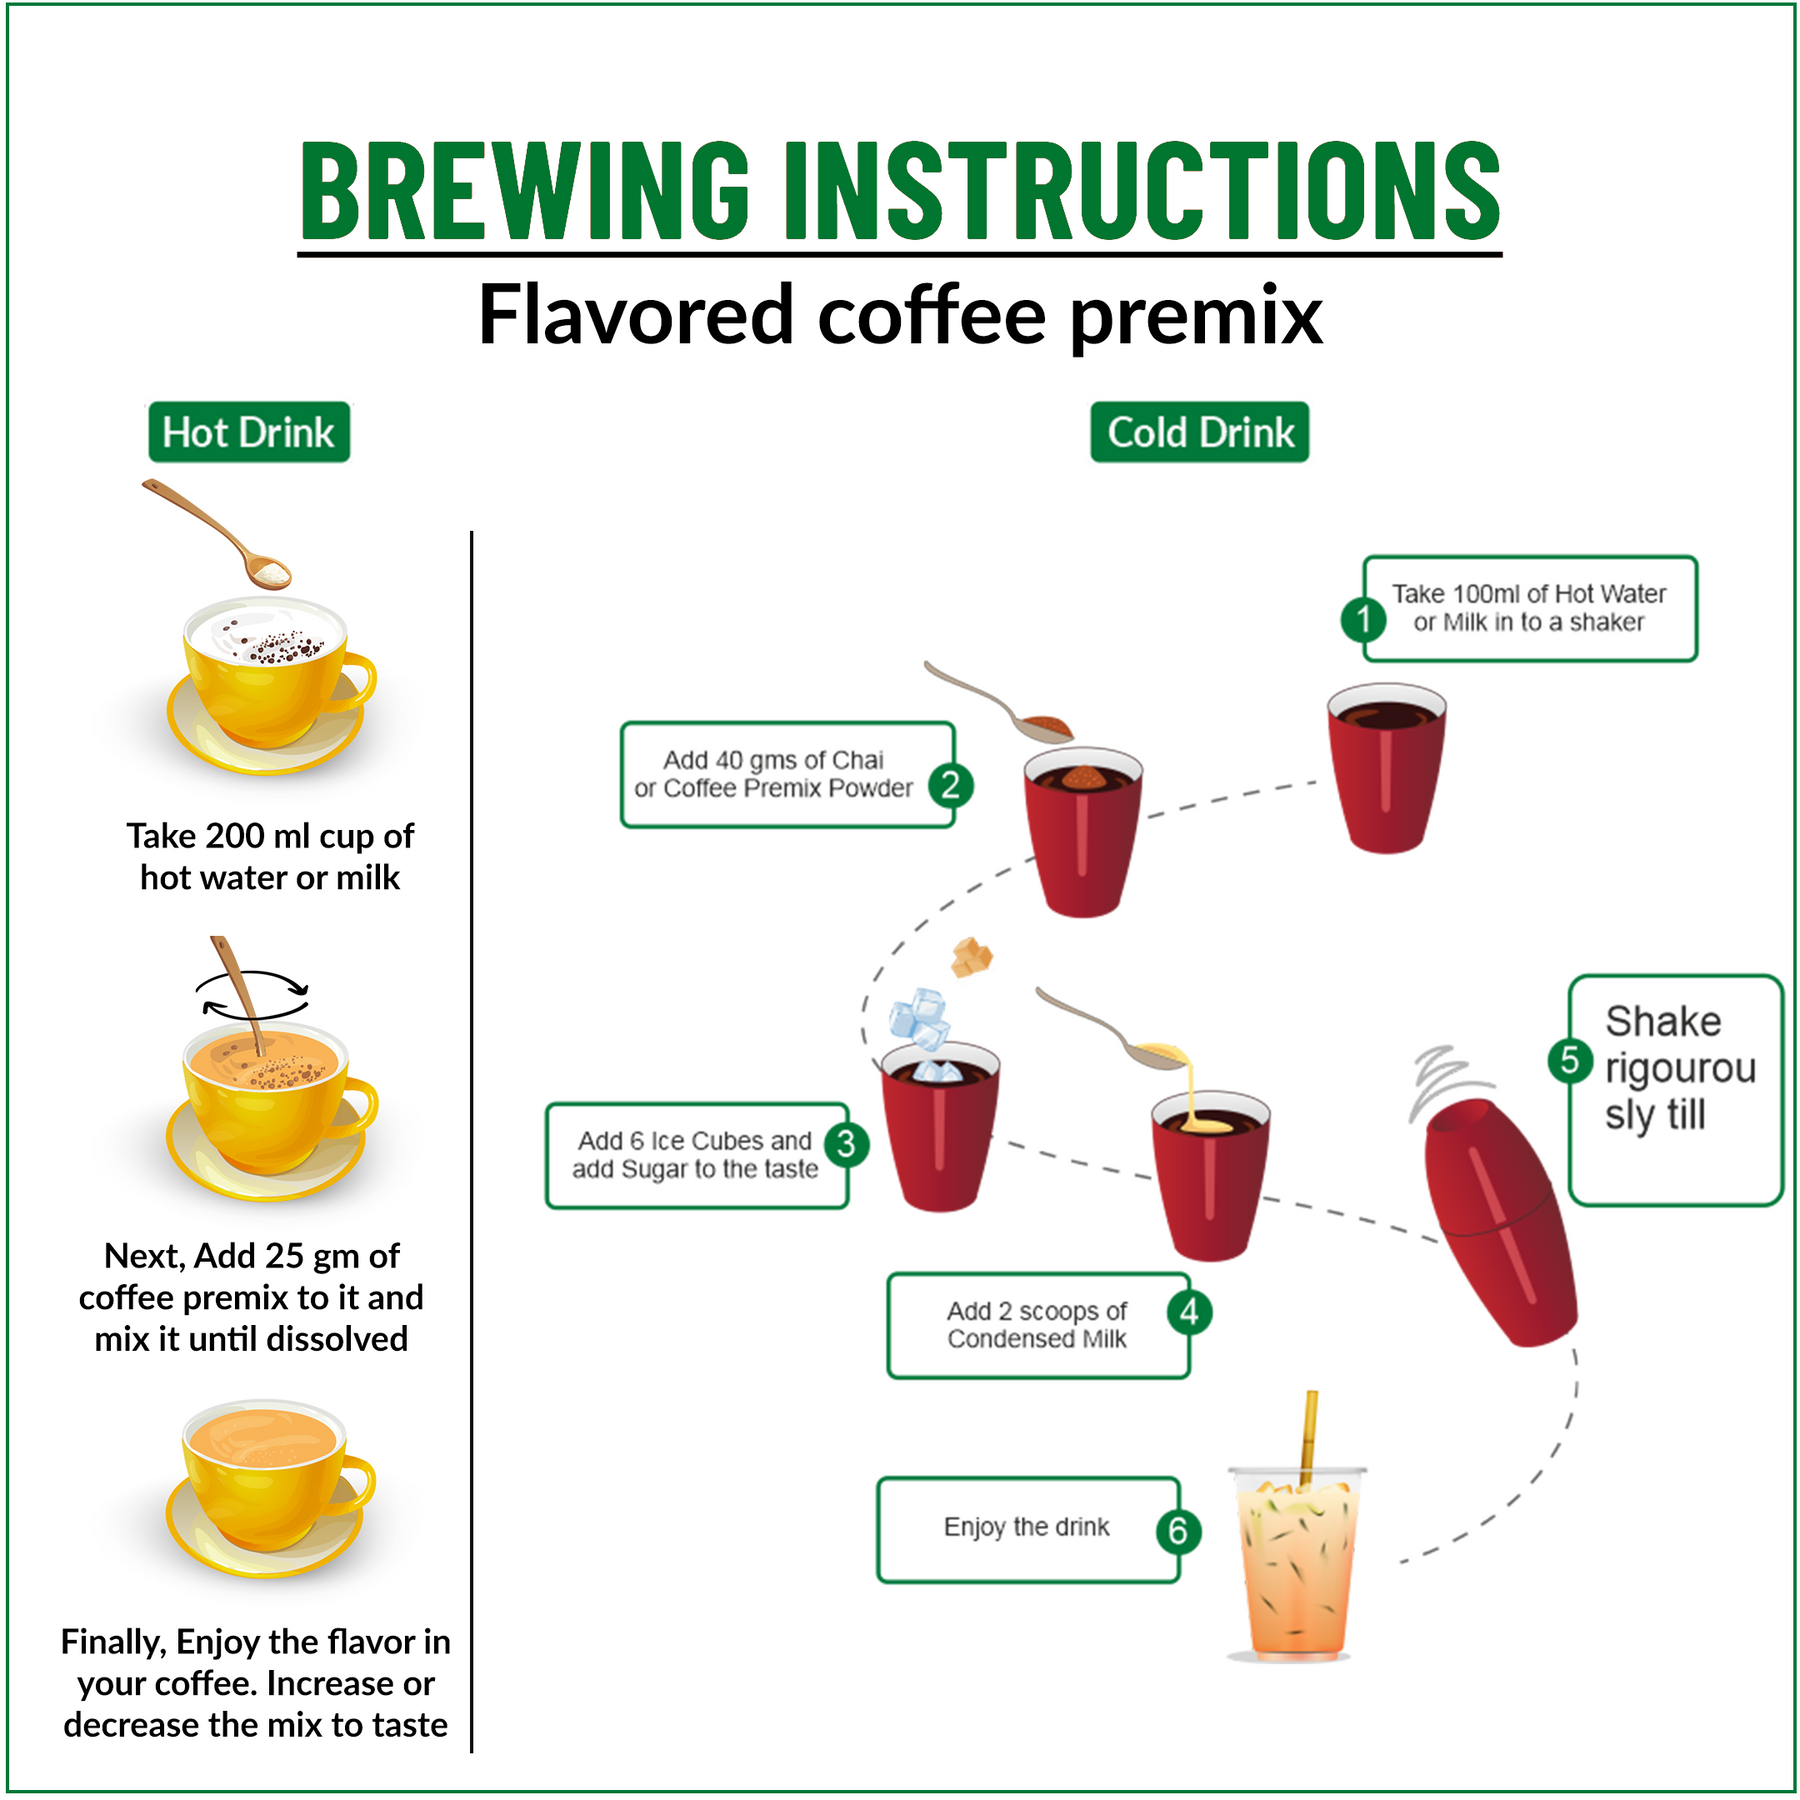 Coconut Mocha Instant Coffee Premix (3 in 1) - 800 gms